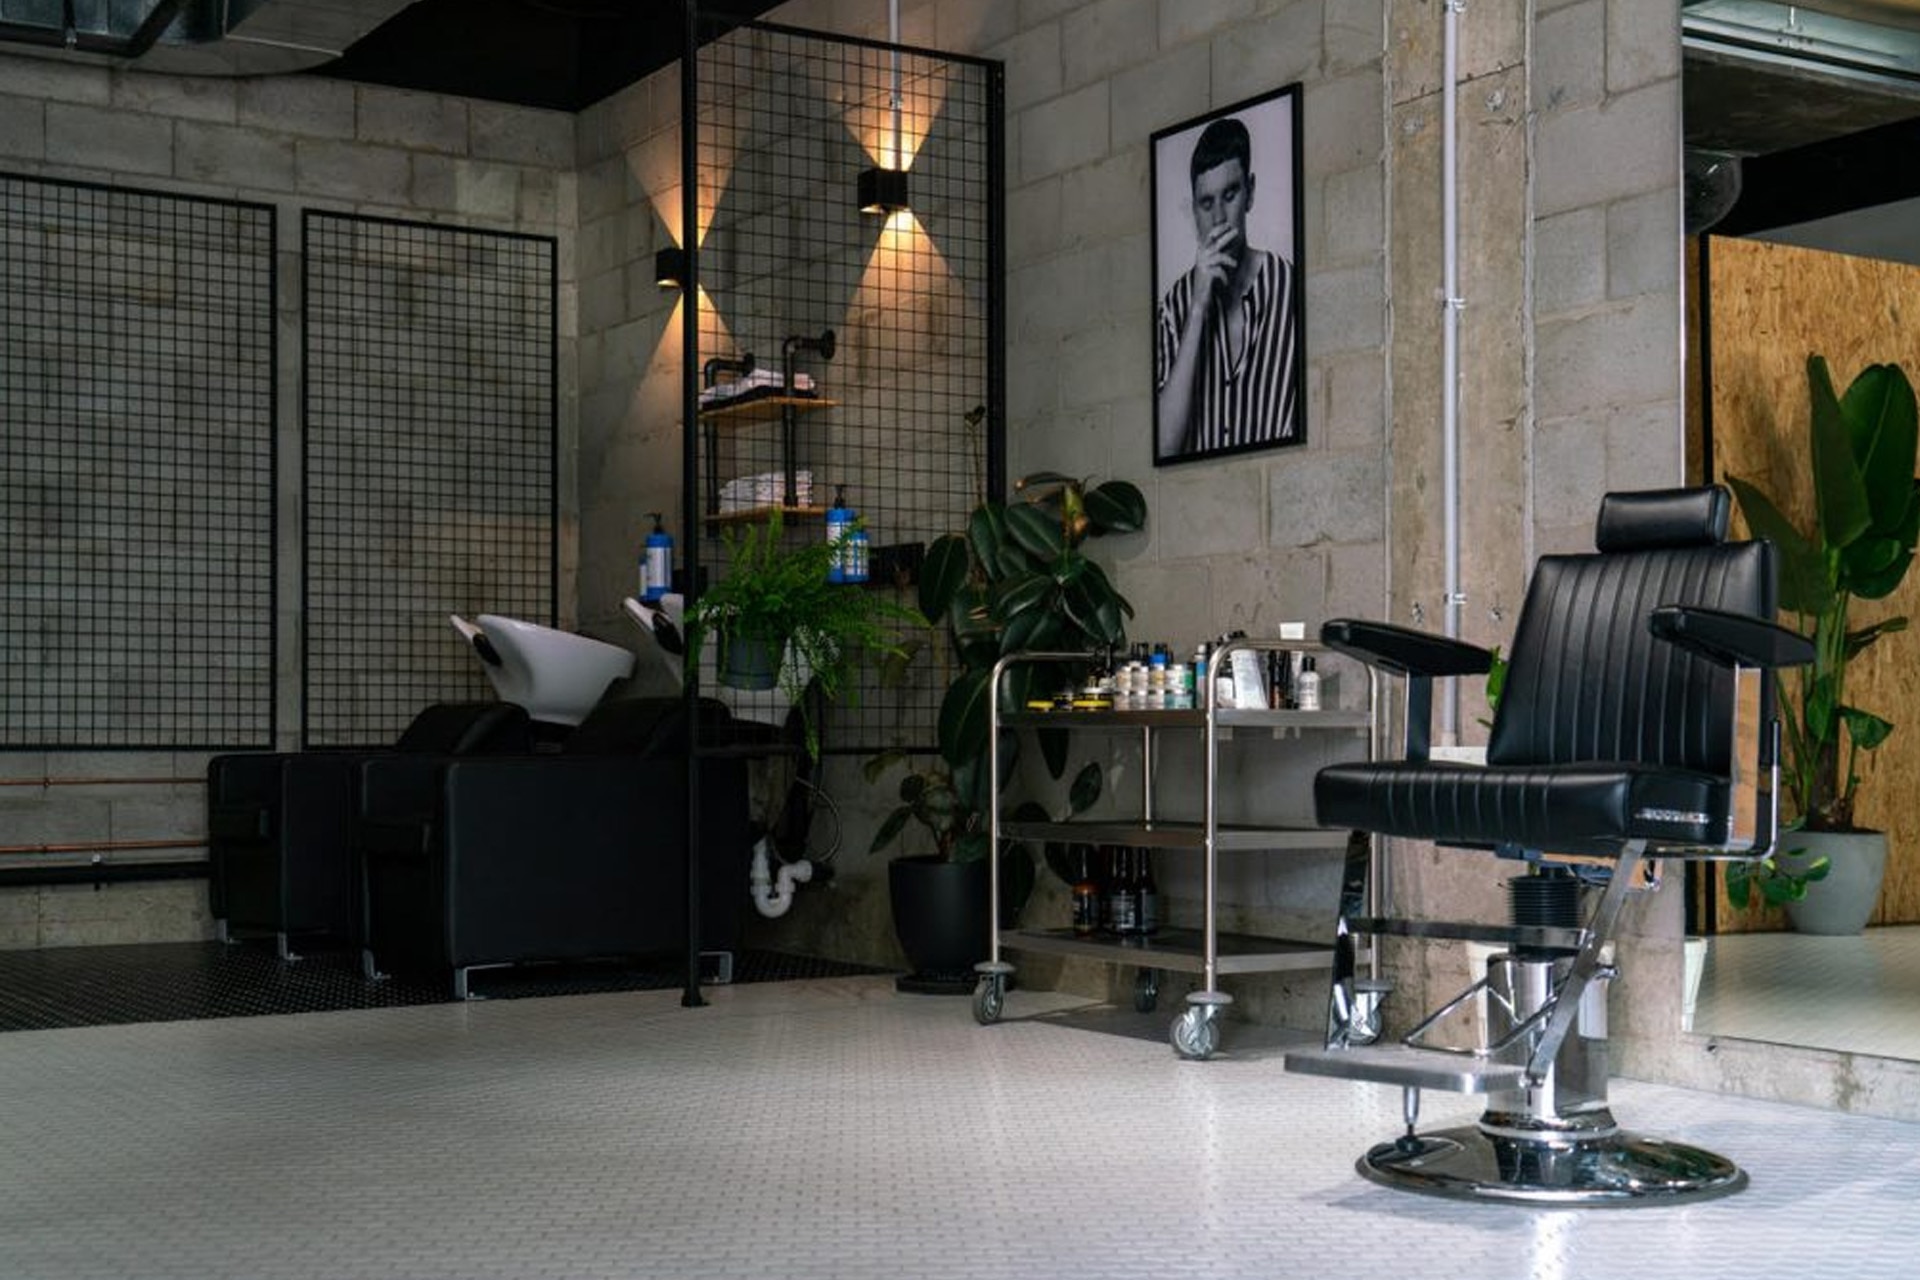 12 Of The Best Barber Shops In Brisbane - Gq Australia